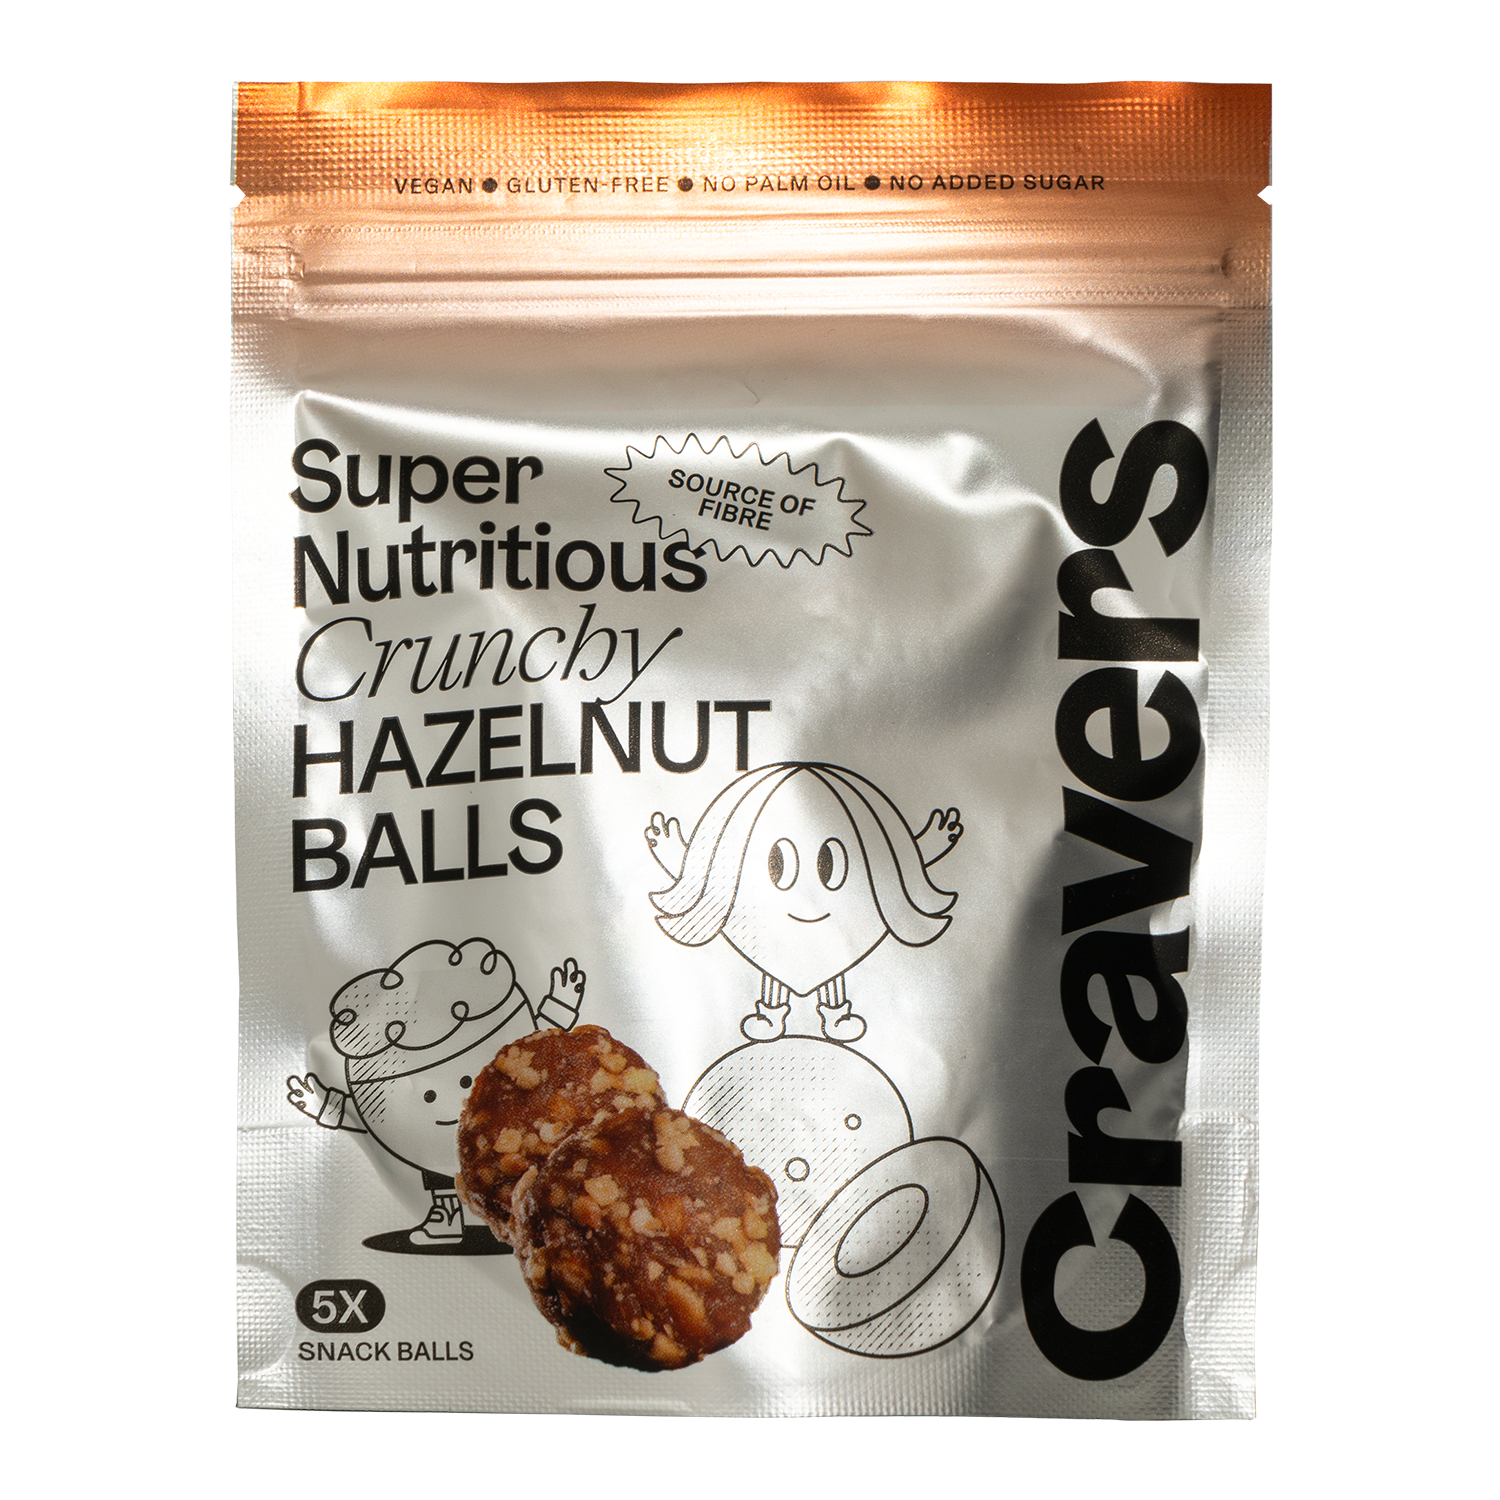 Crunchy Hazelnut Balls